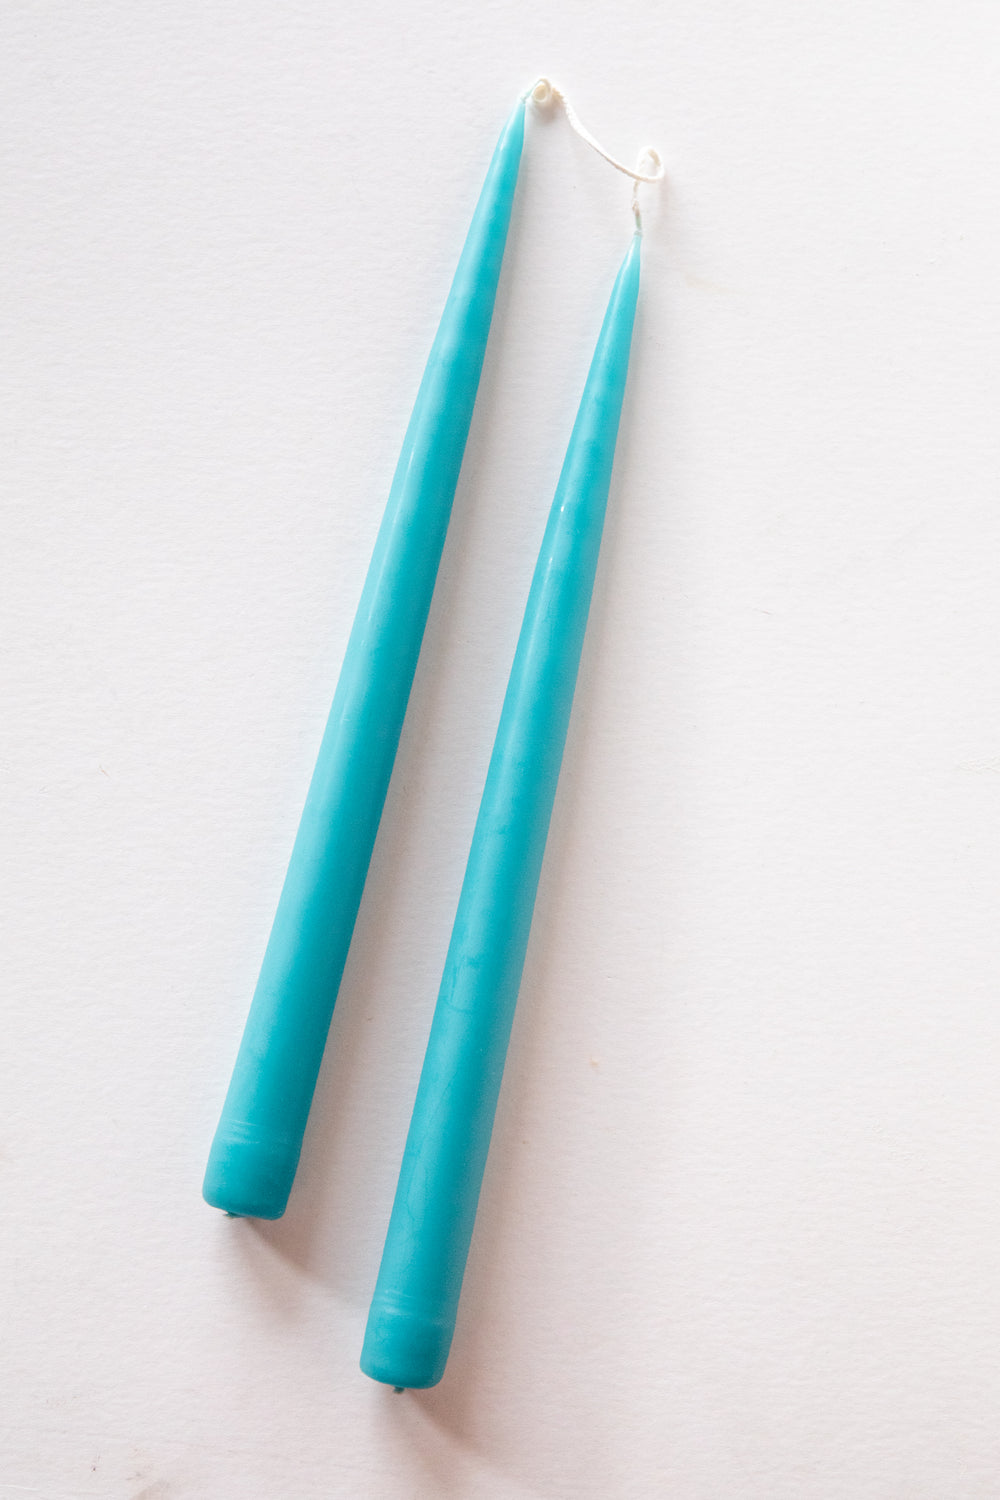 Turquoise Candlesticks